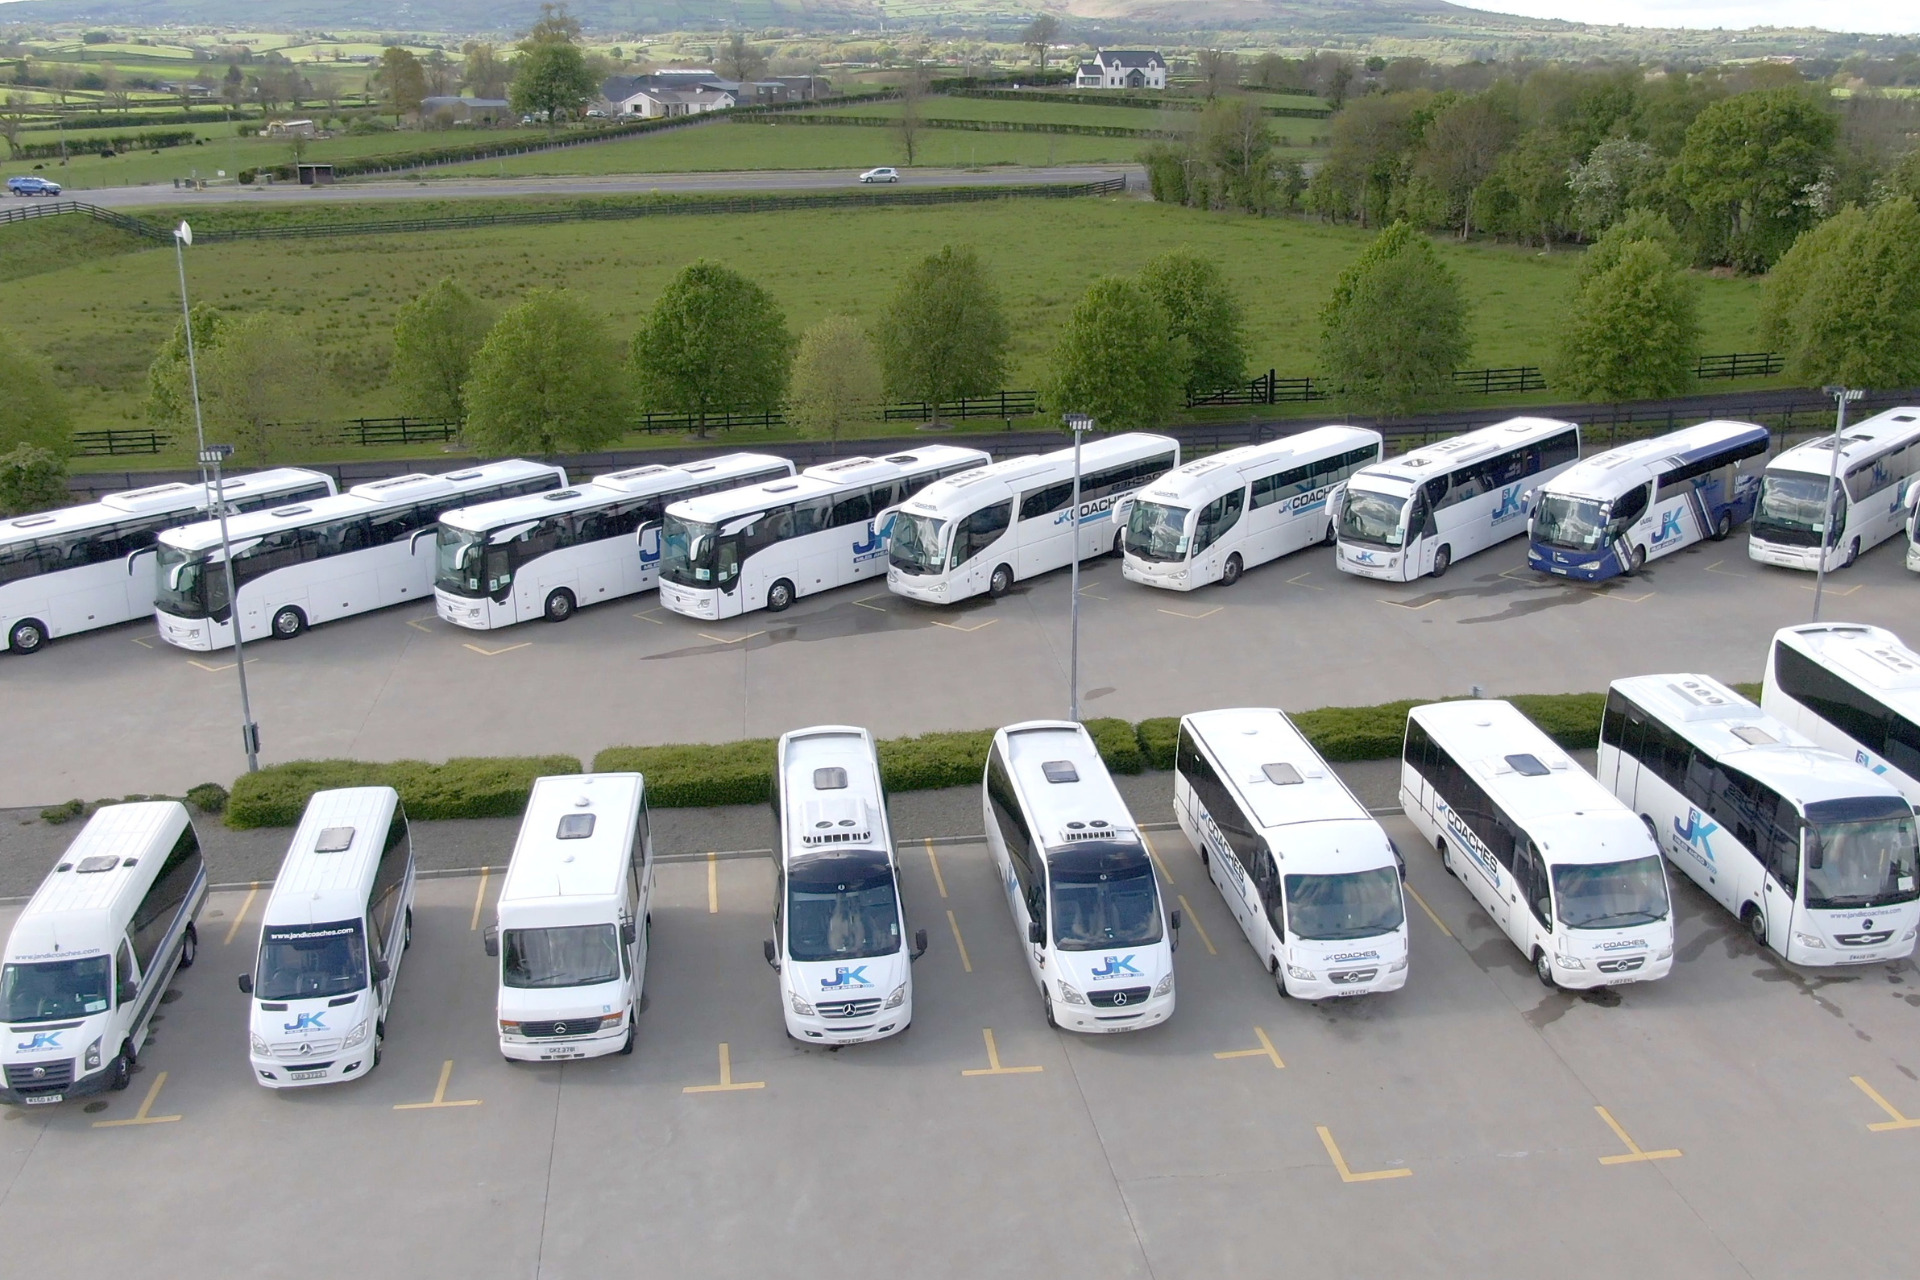 J&K Coaches Limited Fleet - Moneymore Depot, Northern Ireland